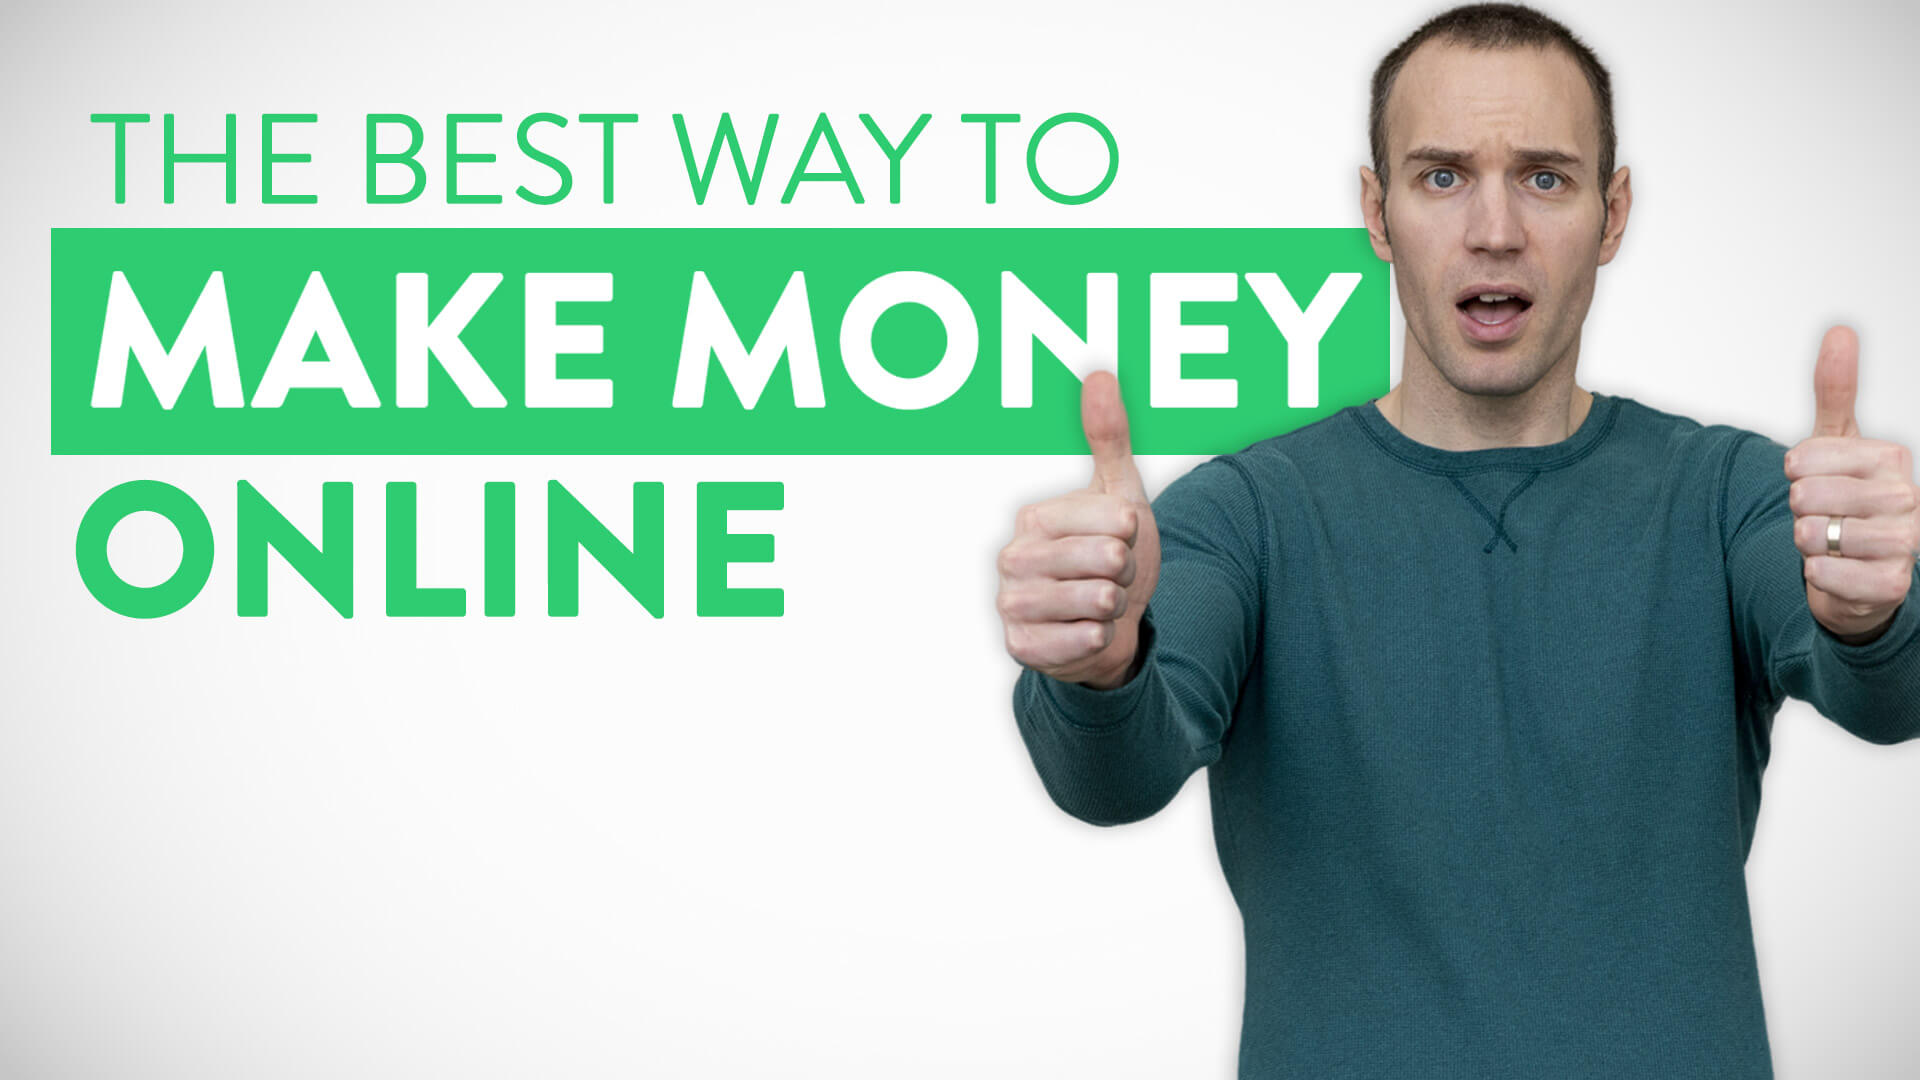 Best Way to Make Money Online? The Stock Market... (I'll Explain!)